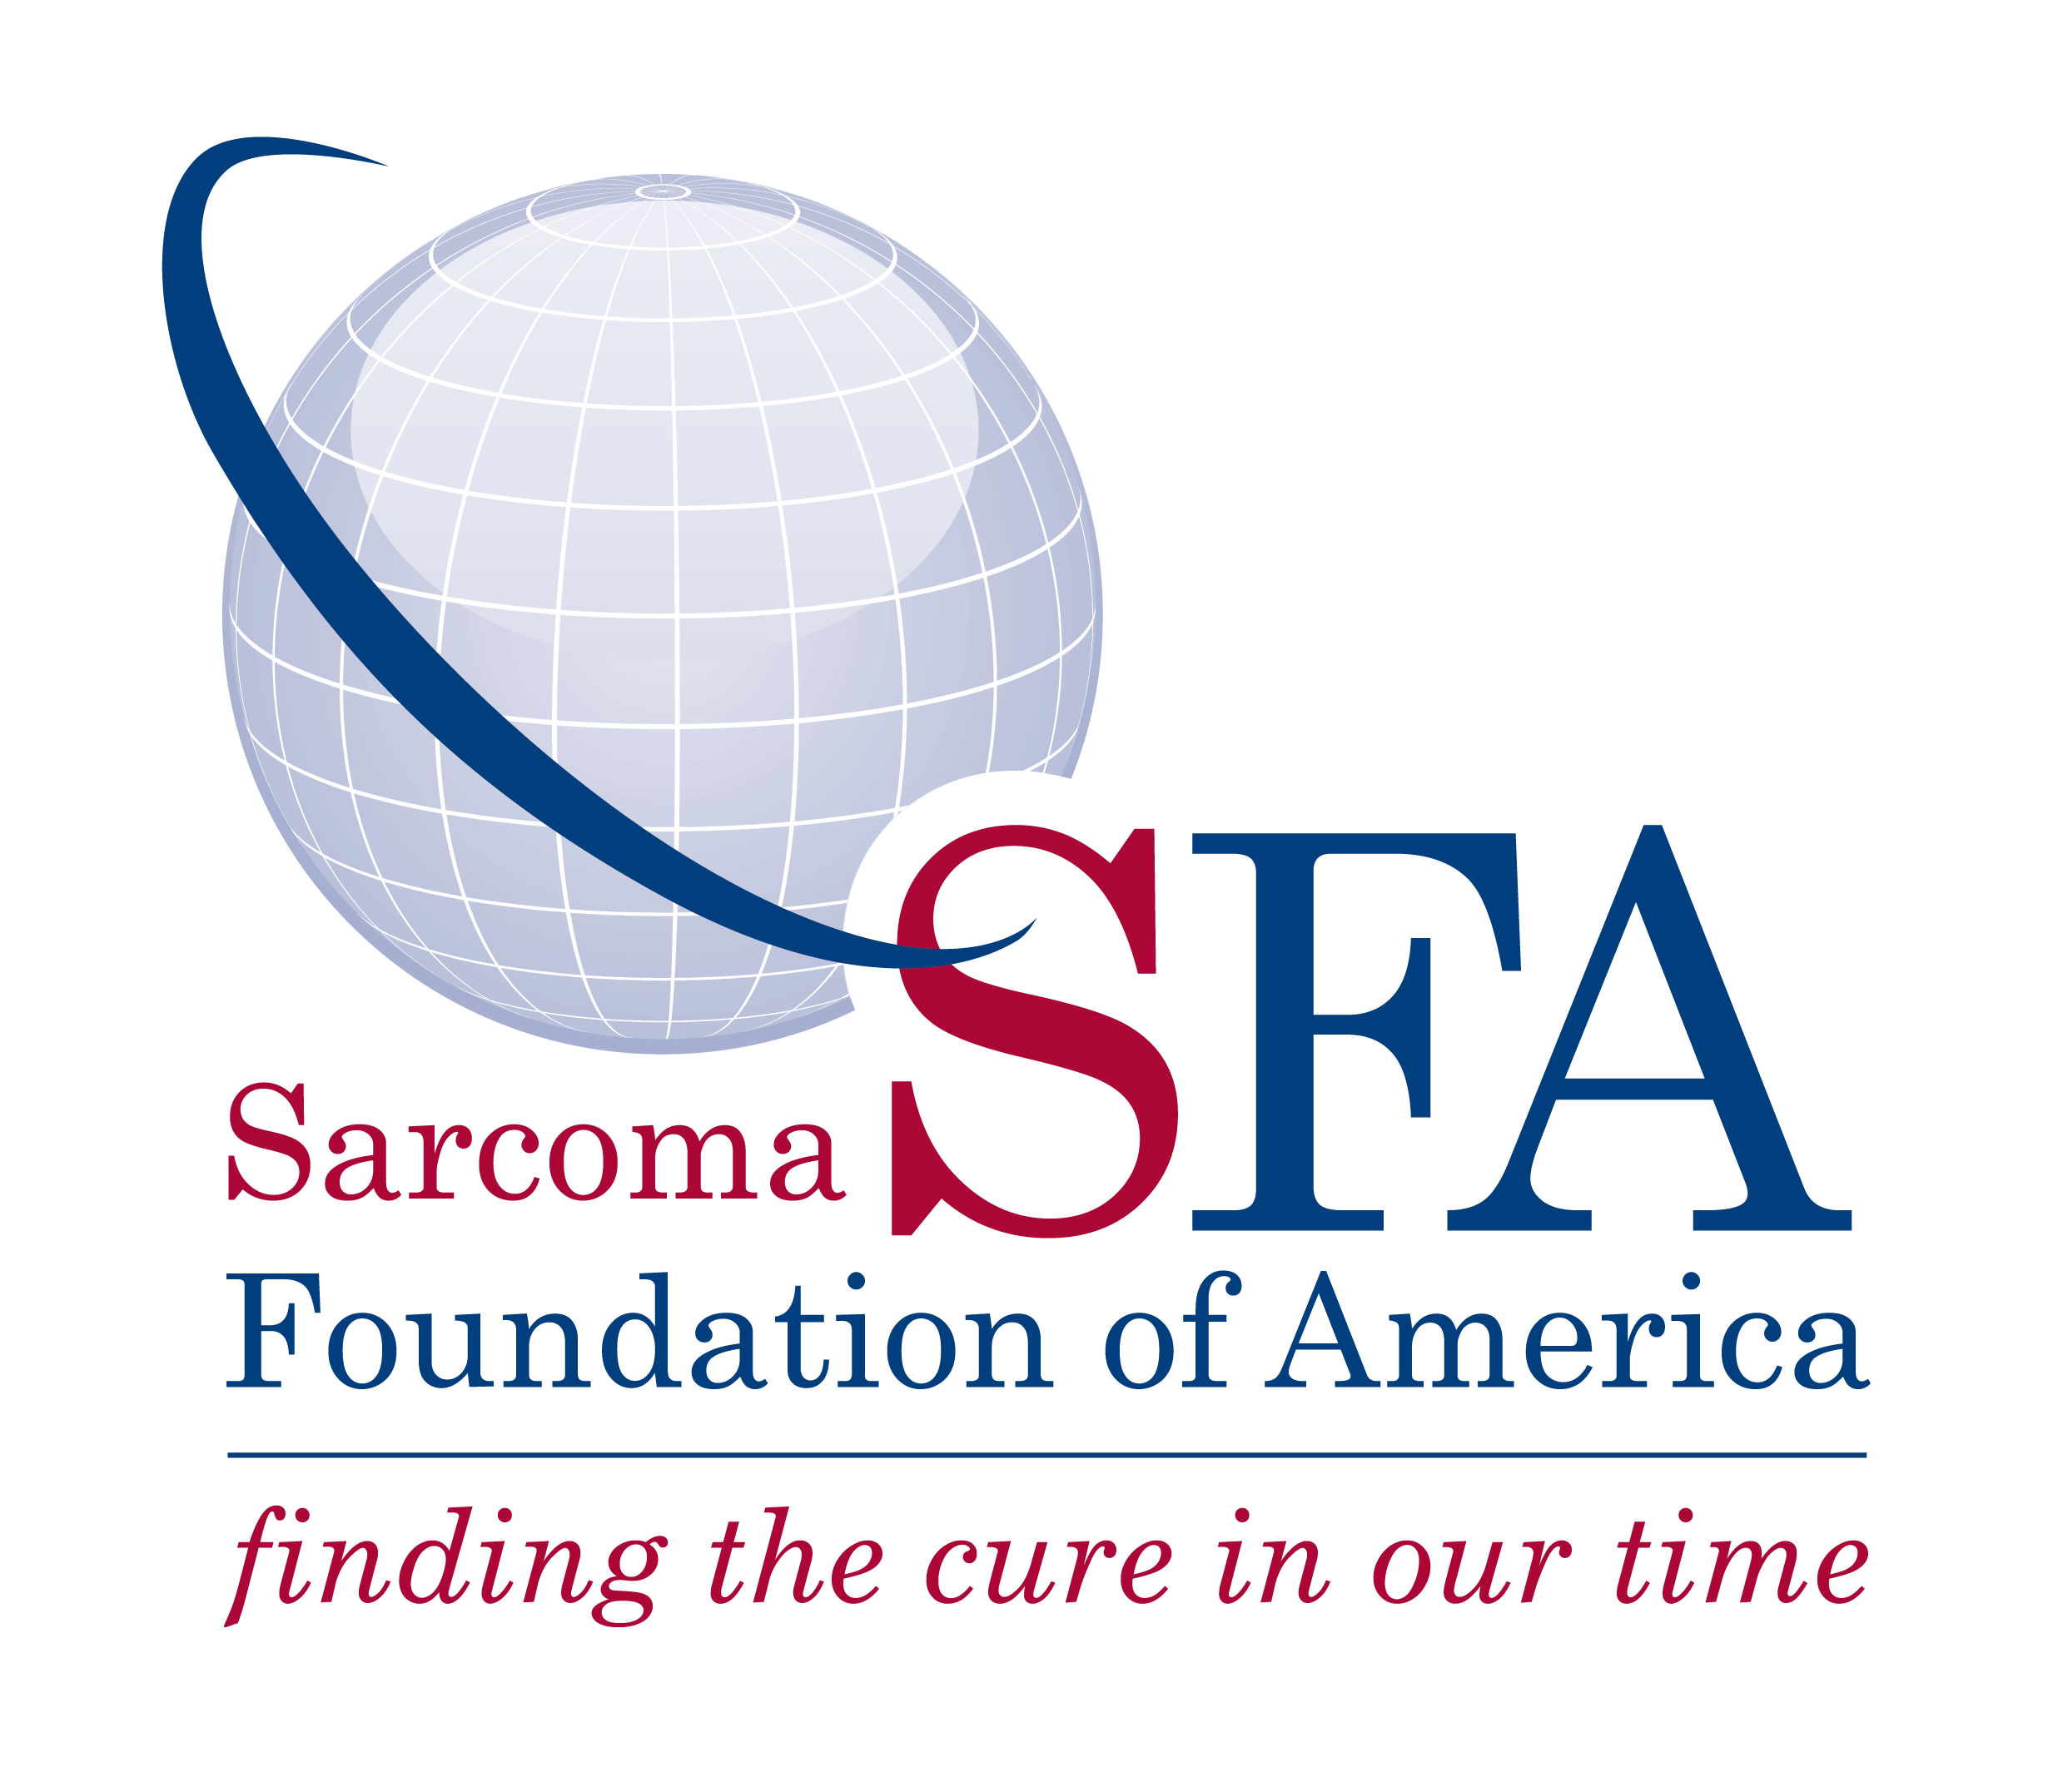 Sarcoma Foundation of America - Celebrating 20 Years - Est. 2000